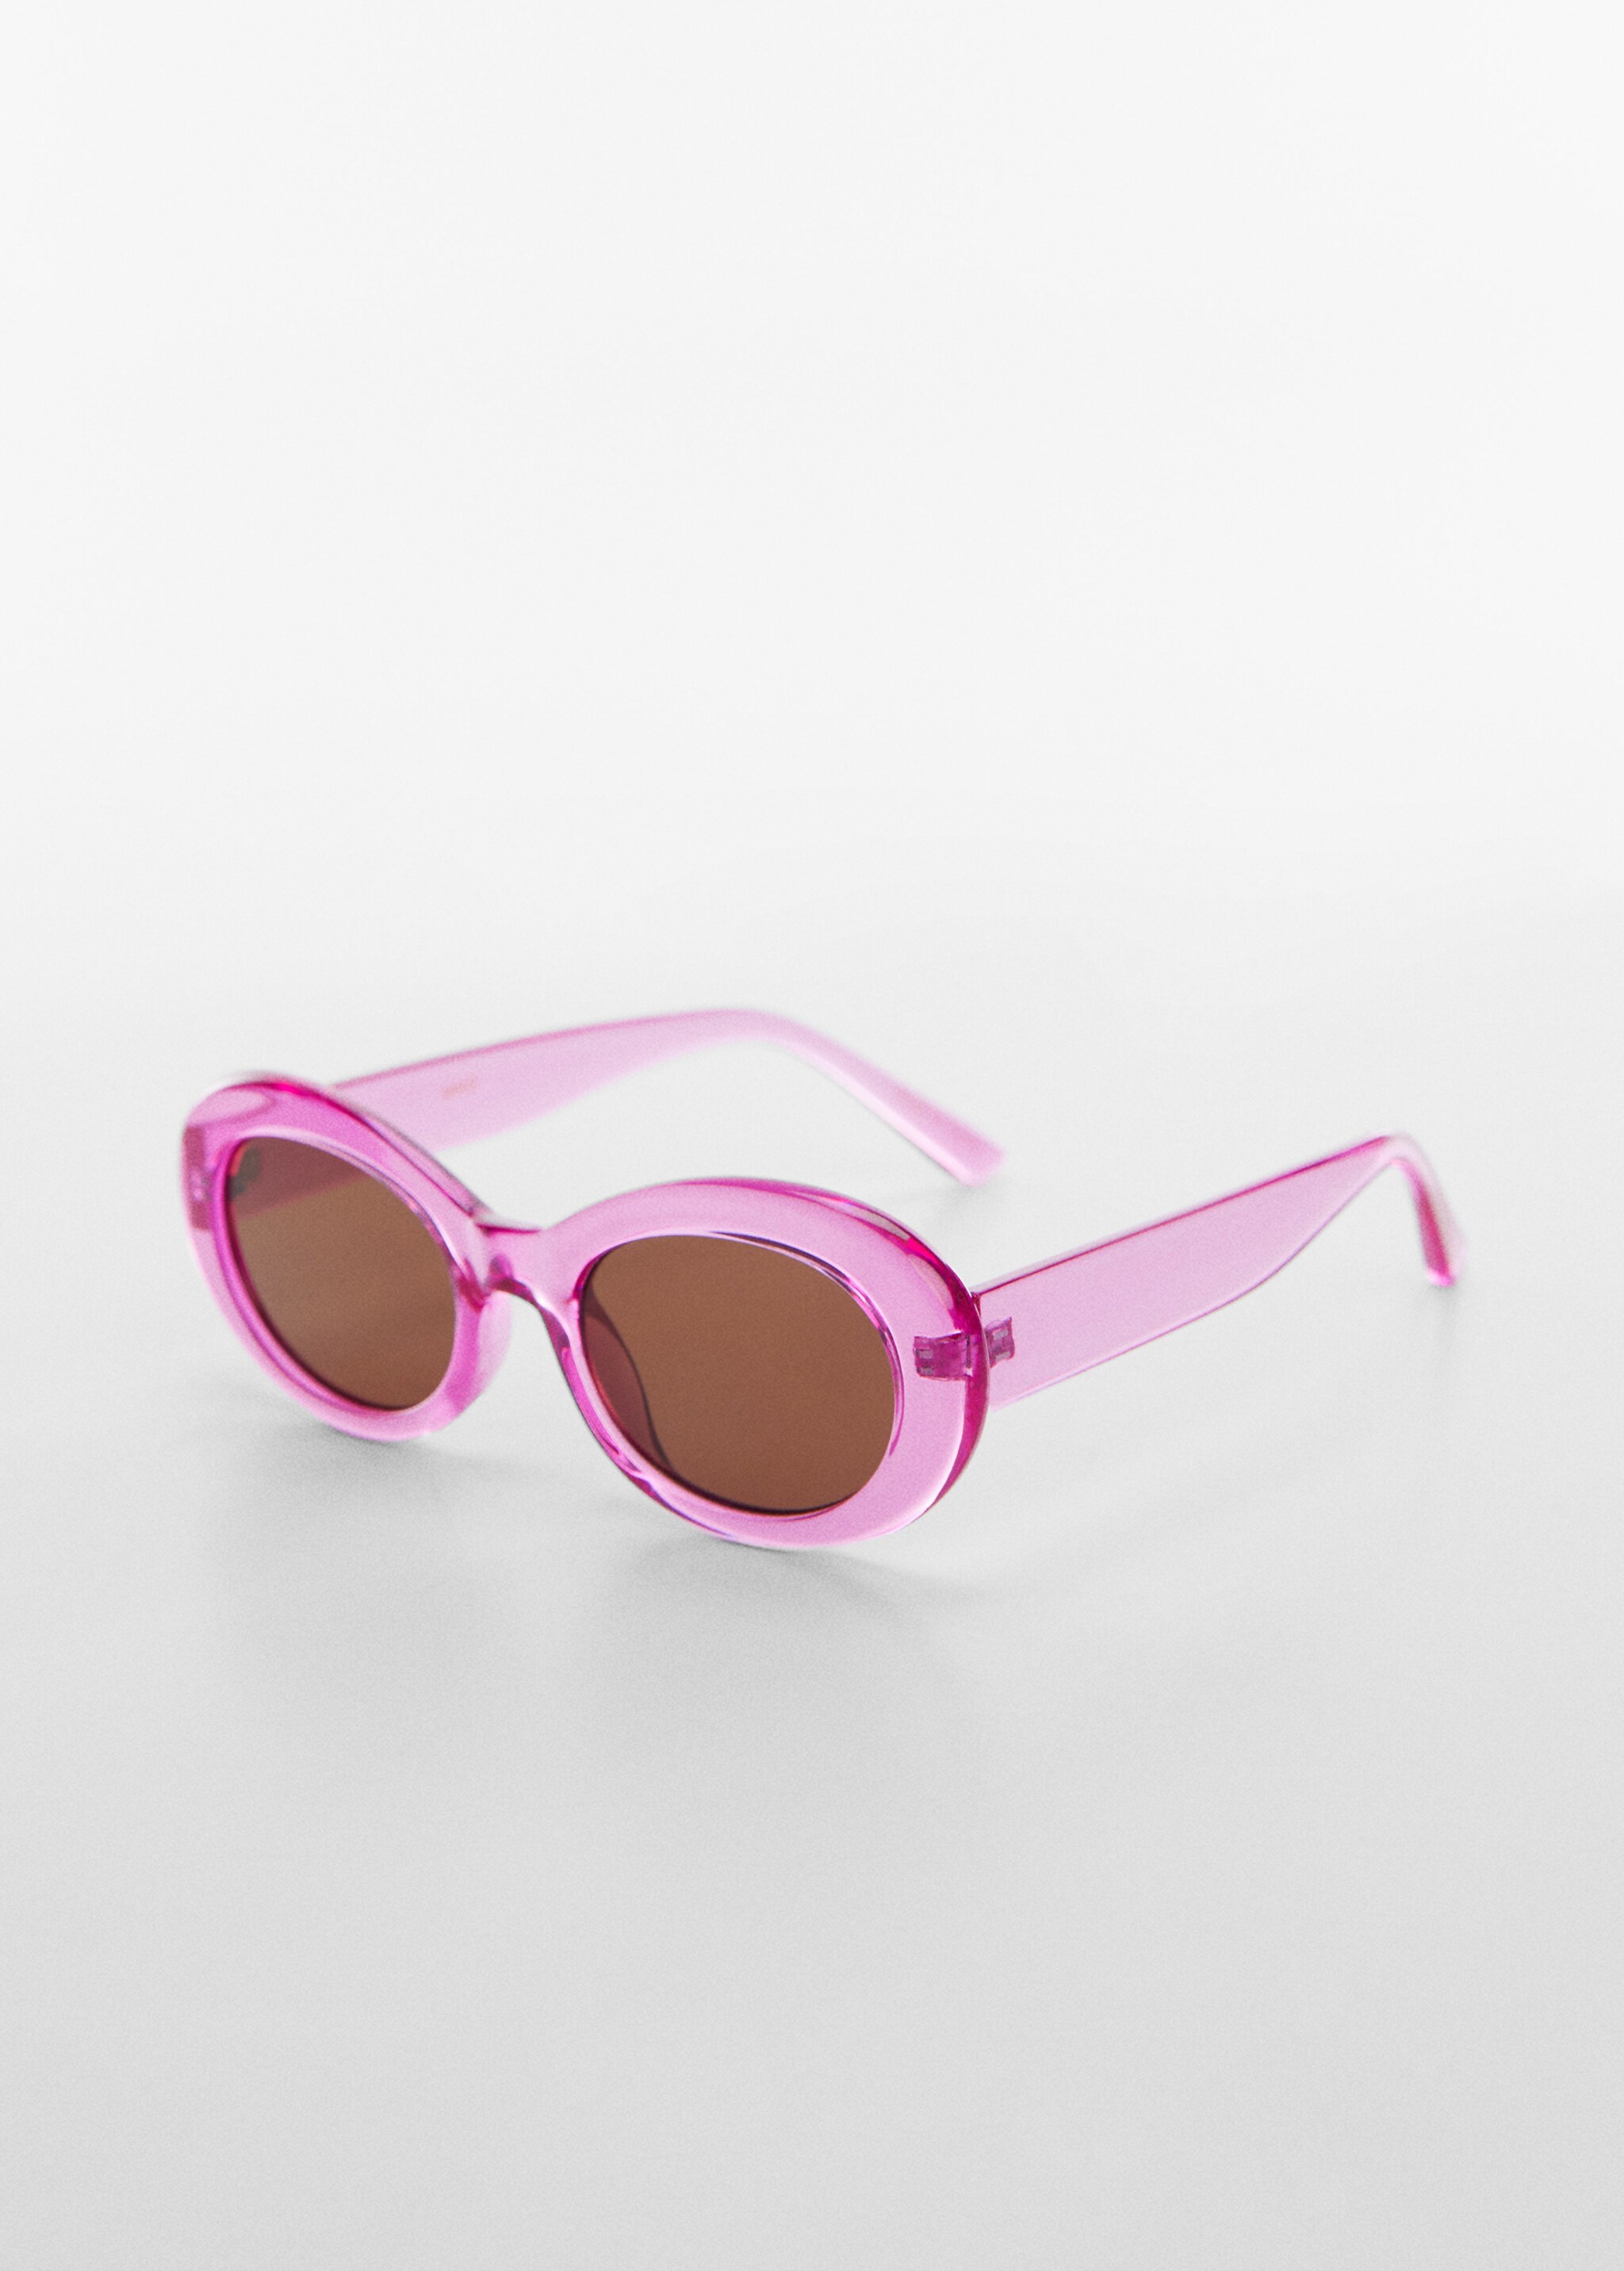 Semi-transparent frame sunglasses - Plan mediu